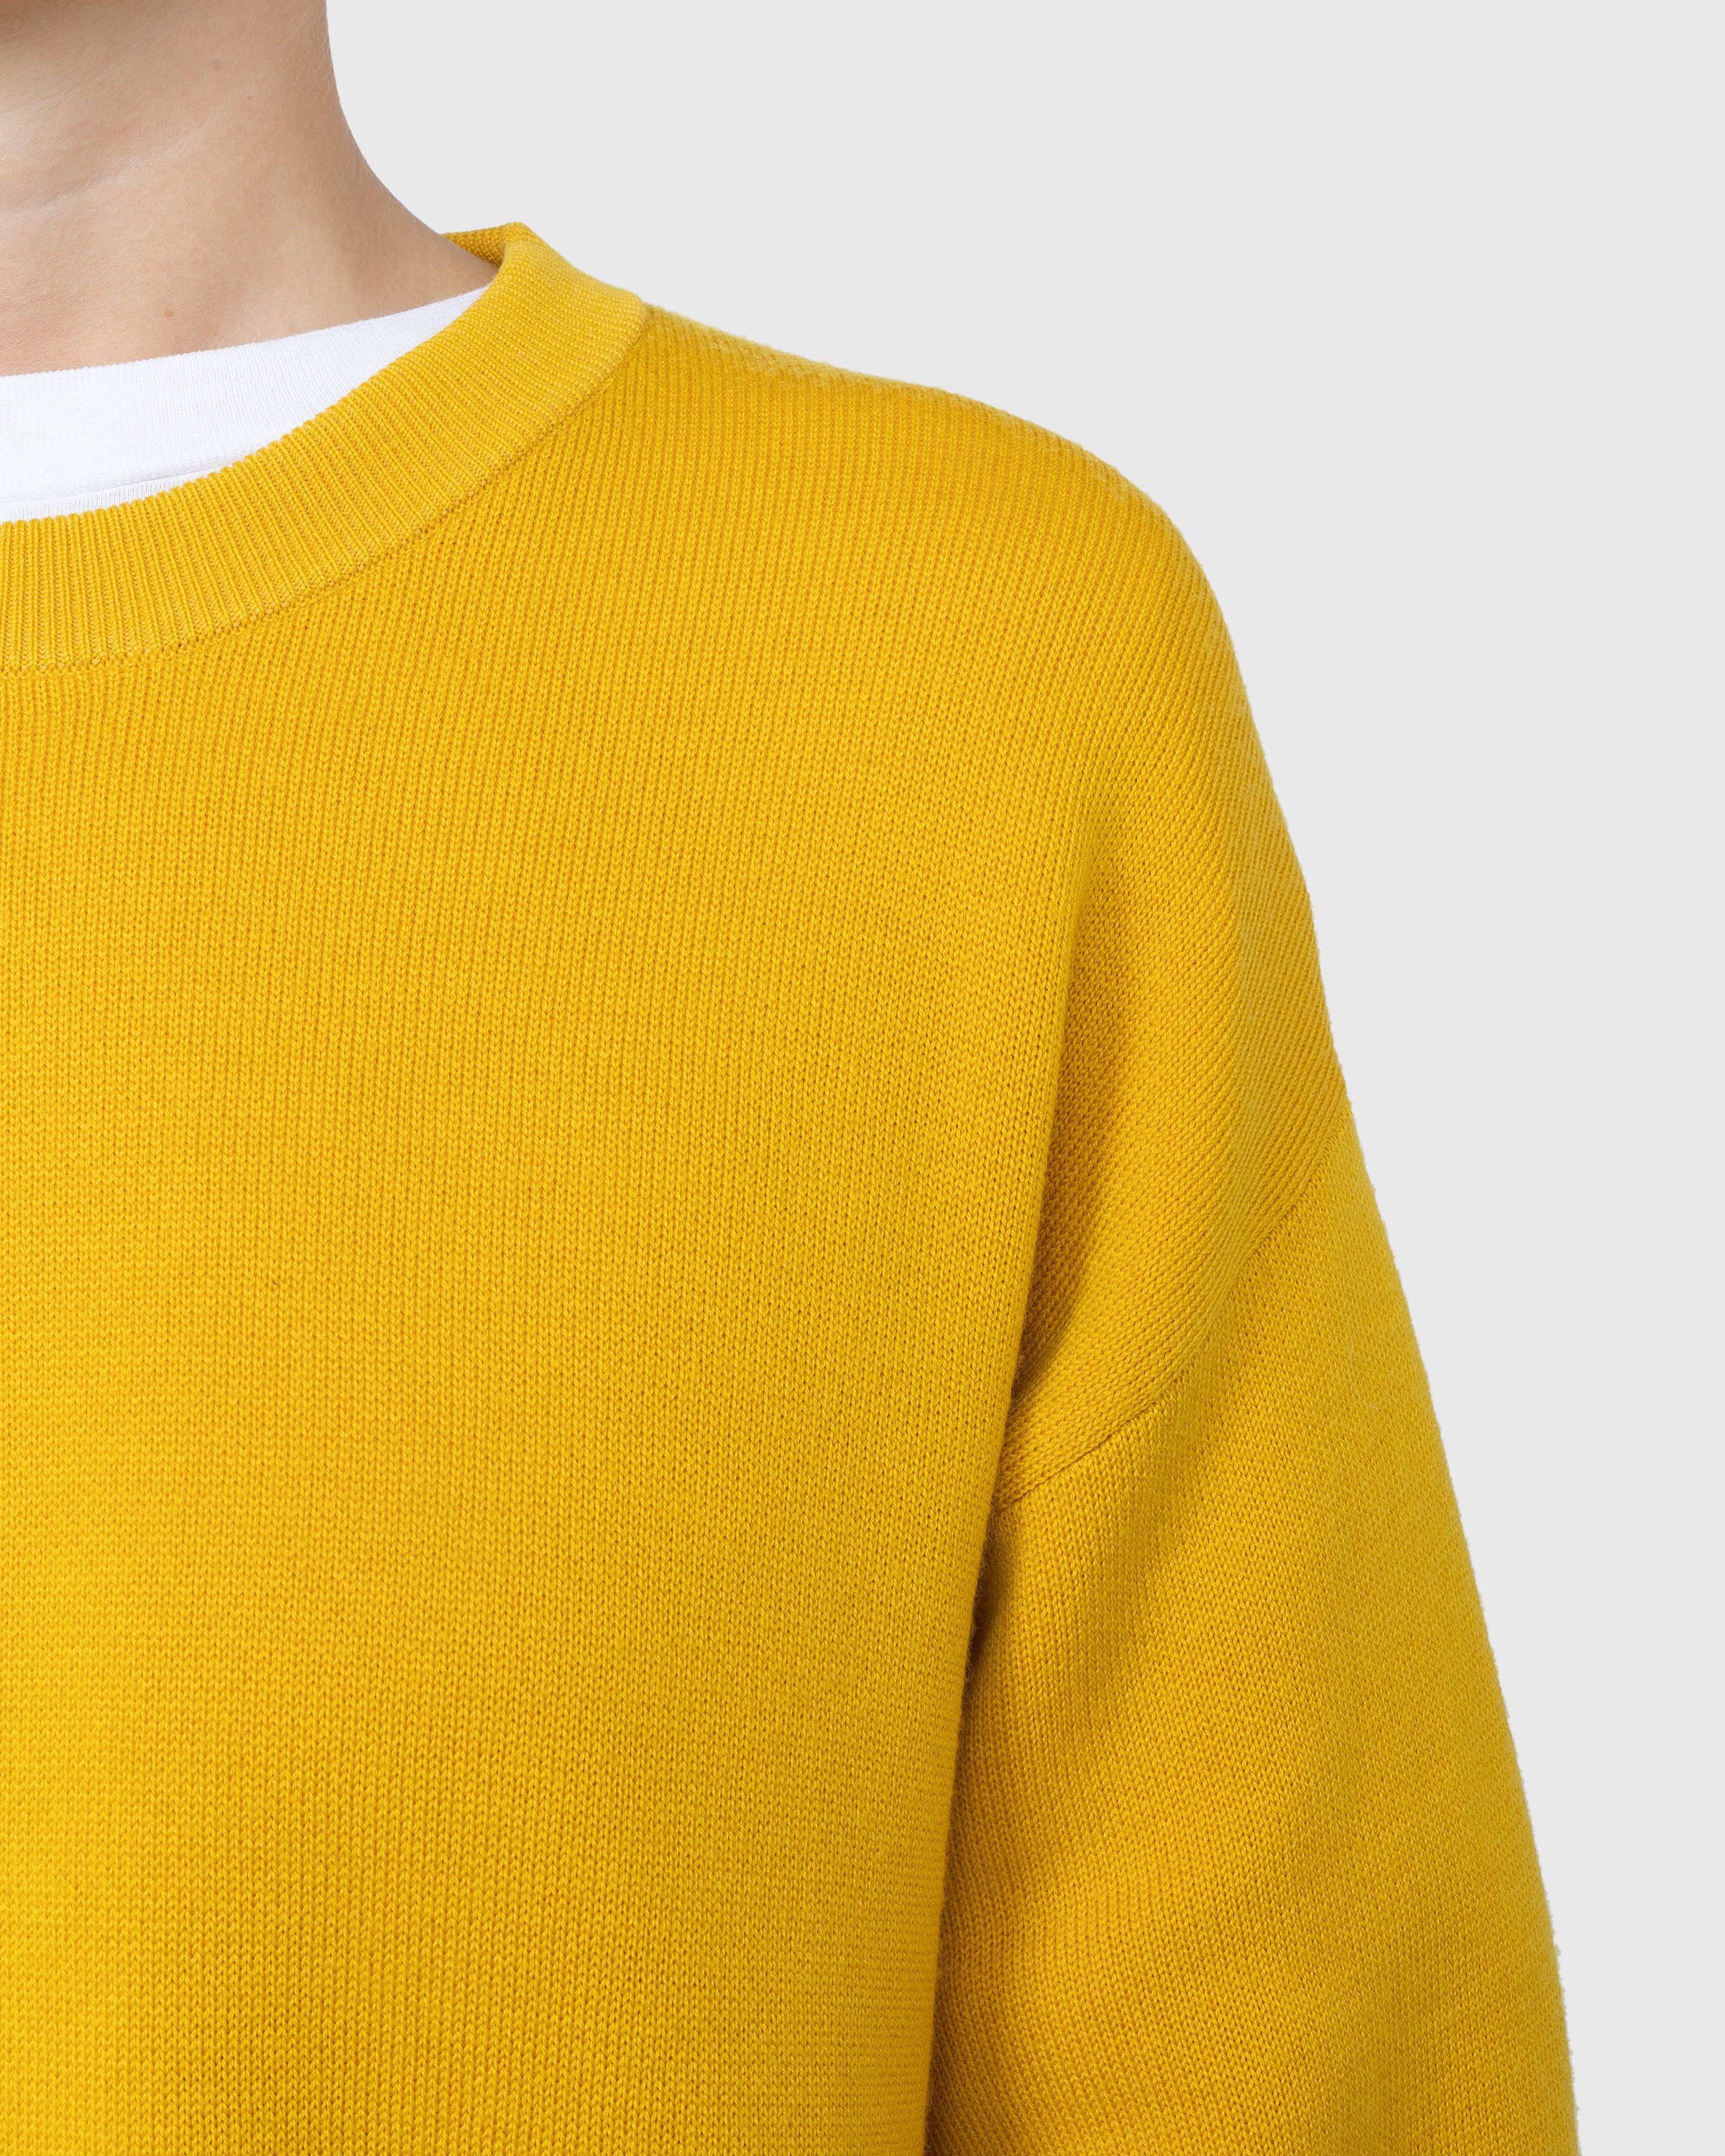 Acne Studios - Merino Wool Crewneck Sweater Yellow - Clothing - Yellow - Image 6